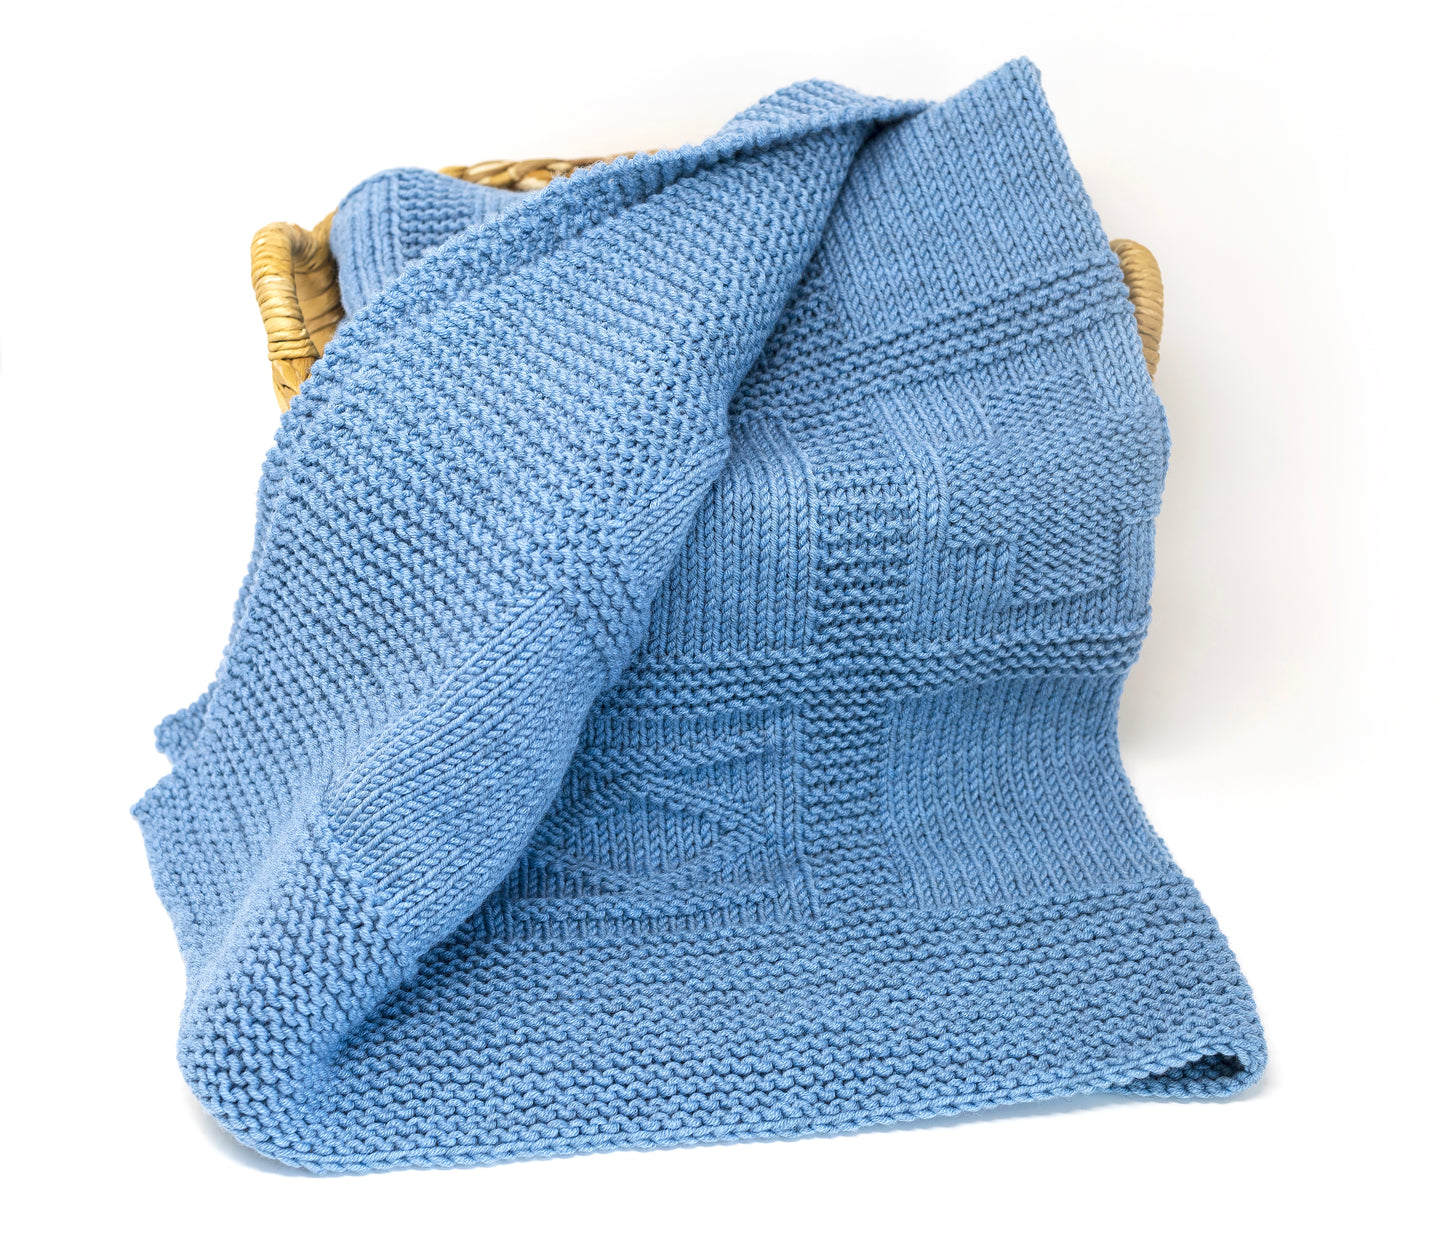 blue merino wool hand-knitted baby blanket in geometric knitting pattern